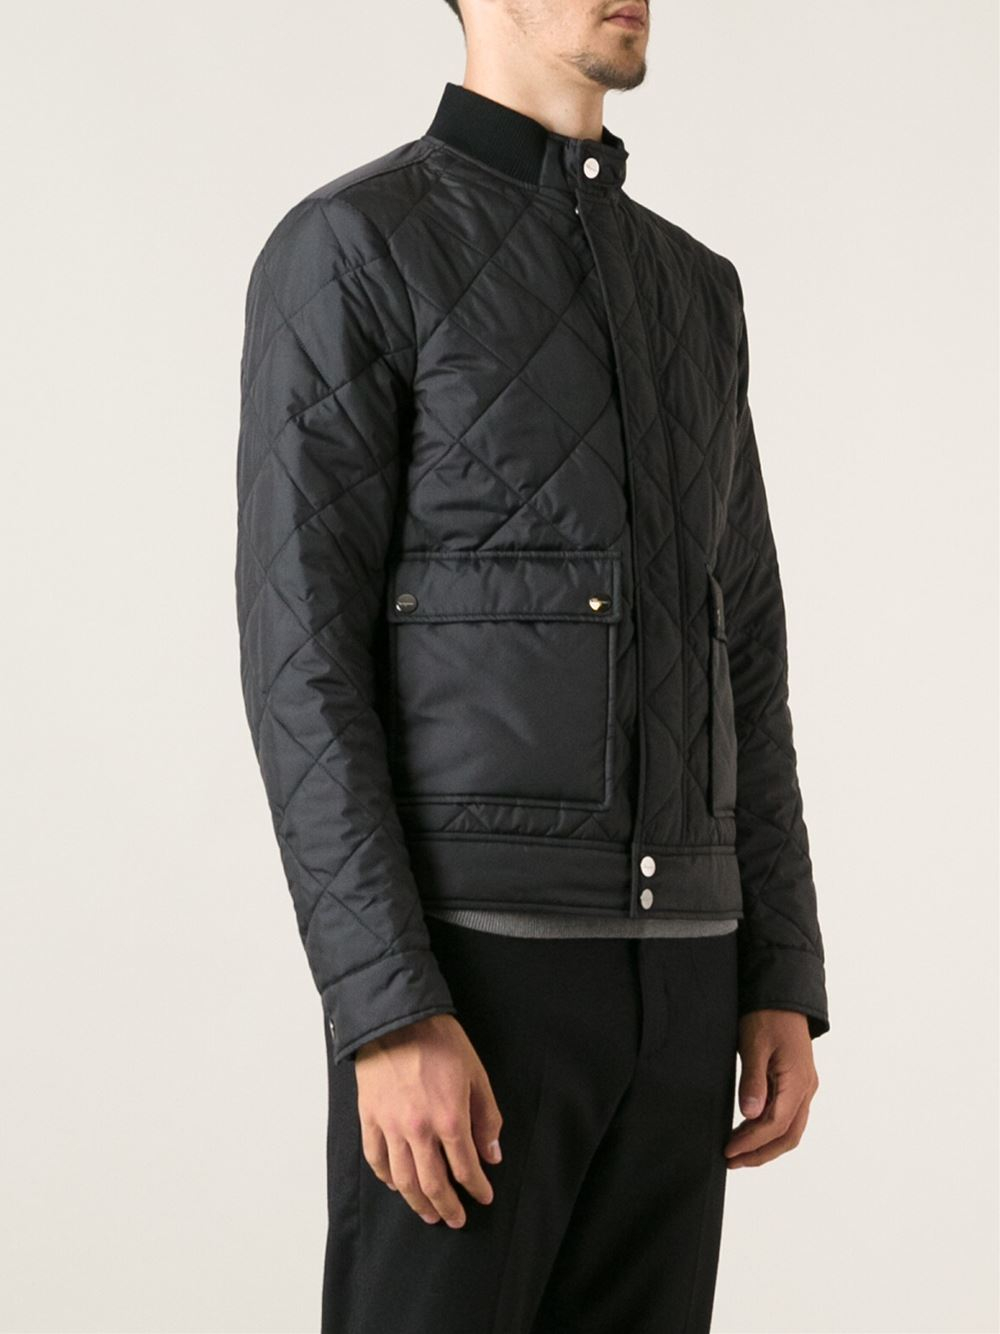 Ferragamo Quilted Jacket in Black for Men | Lyst